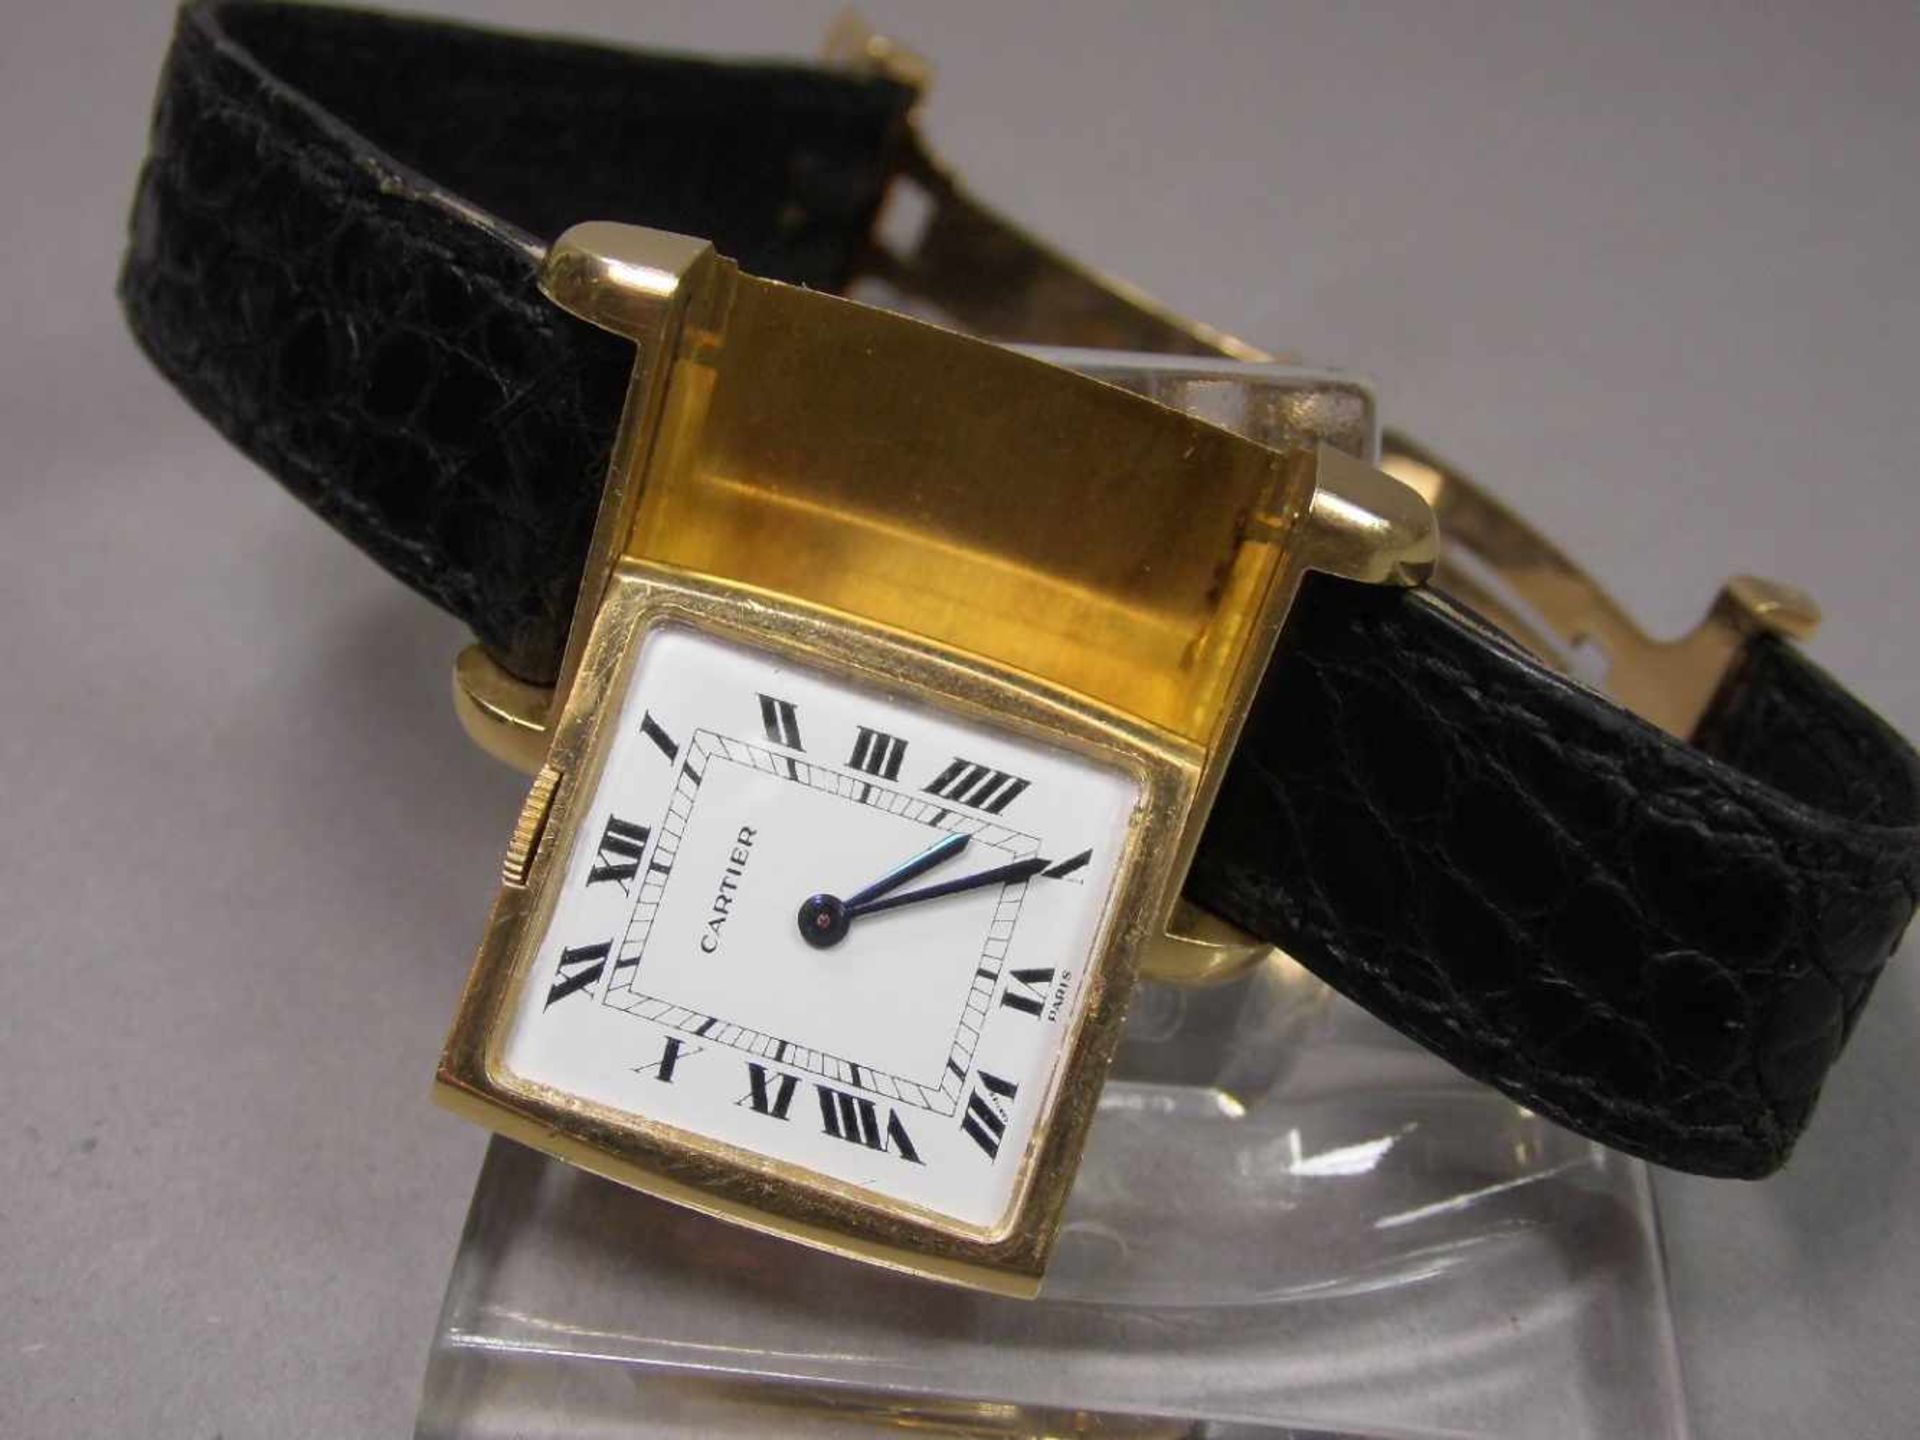 VINTAGE ARMBANDUHR CARTIER REVERSO / wristwatch, Handaufzug, wohl 1970er Jahre, Manufaktur Cartier / - Image 7 of 9